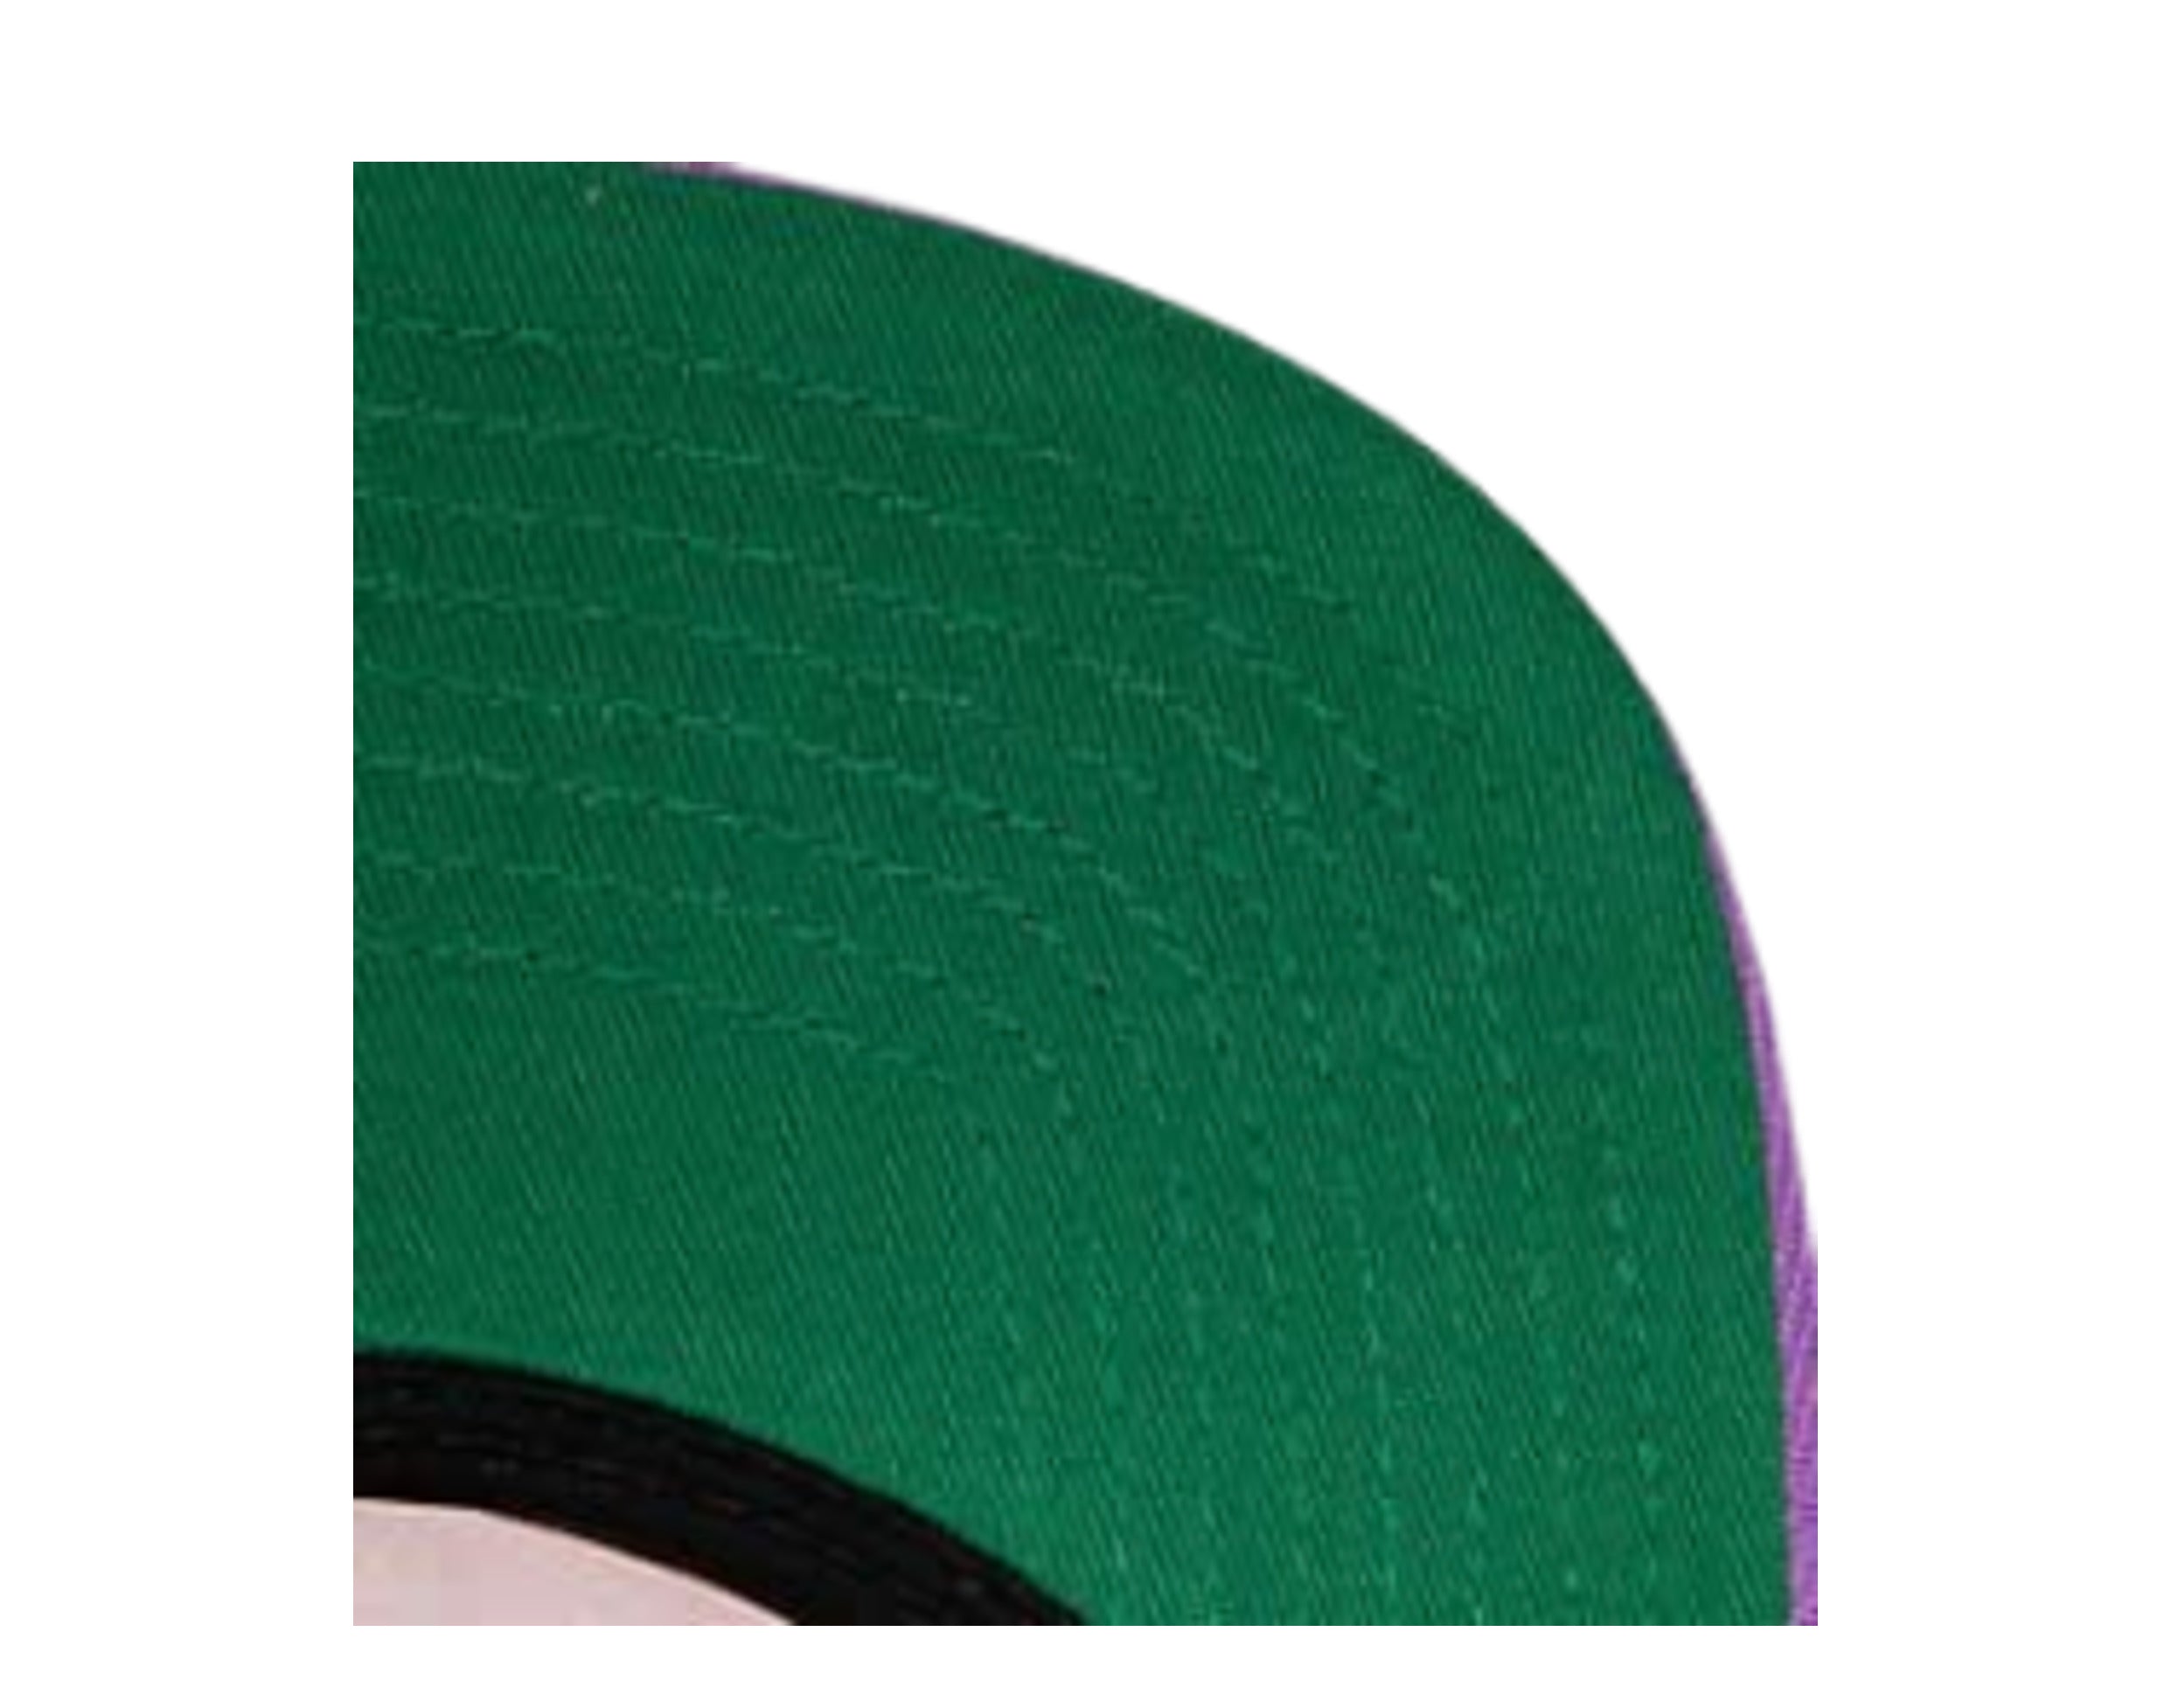 Men's Mitchell & Ness Black/Red Miami Heat Hardwood Classics Sharktooth  Snapback Hat